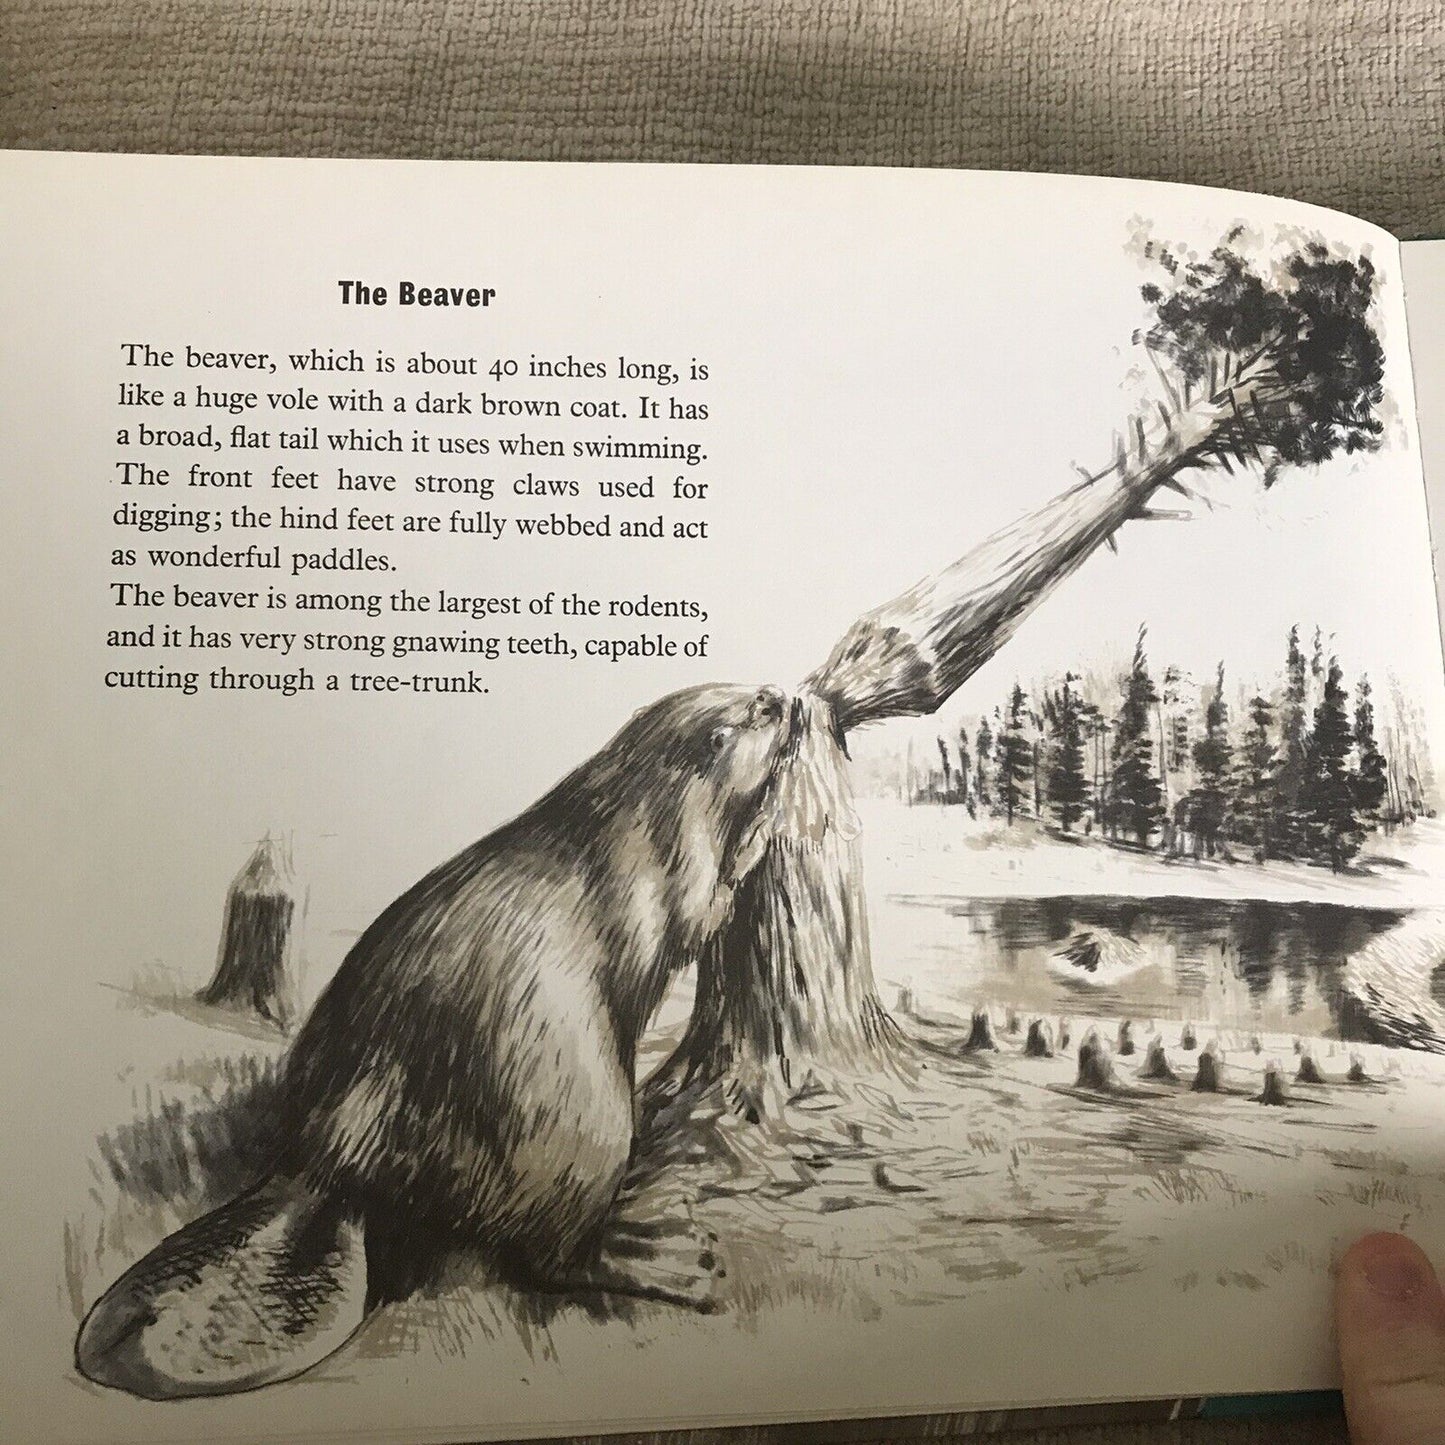 1972 The Small Water Mammals - Maxwell Knight (Barry Driscoll Illust) Bodley Hea